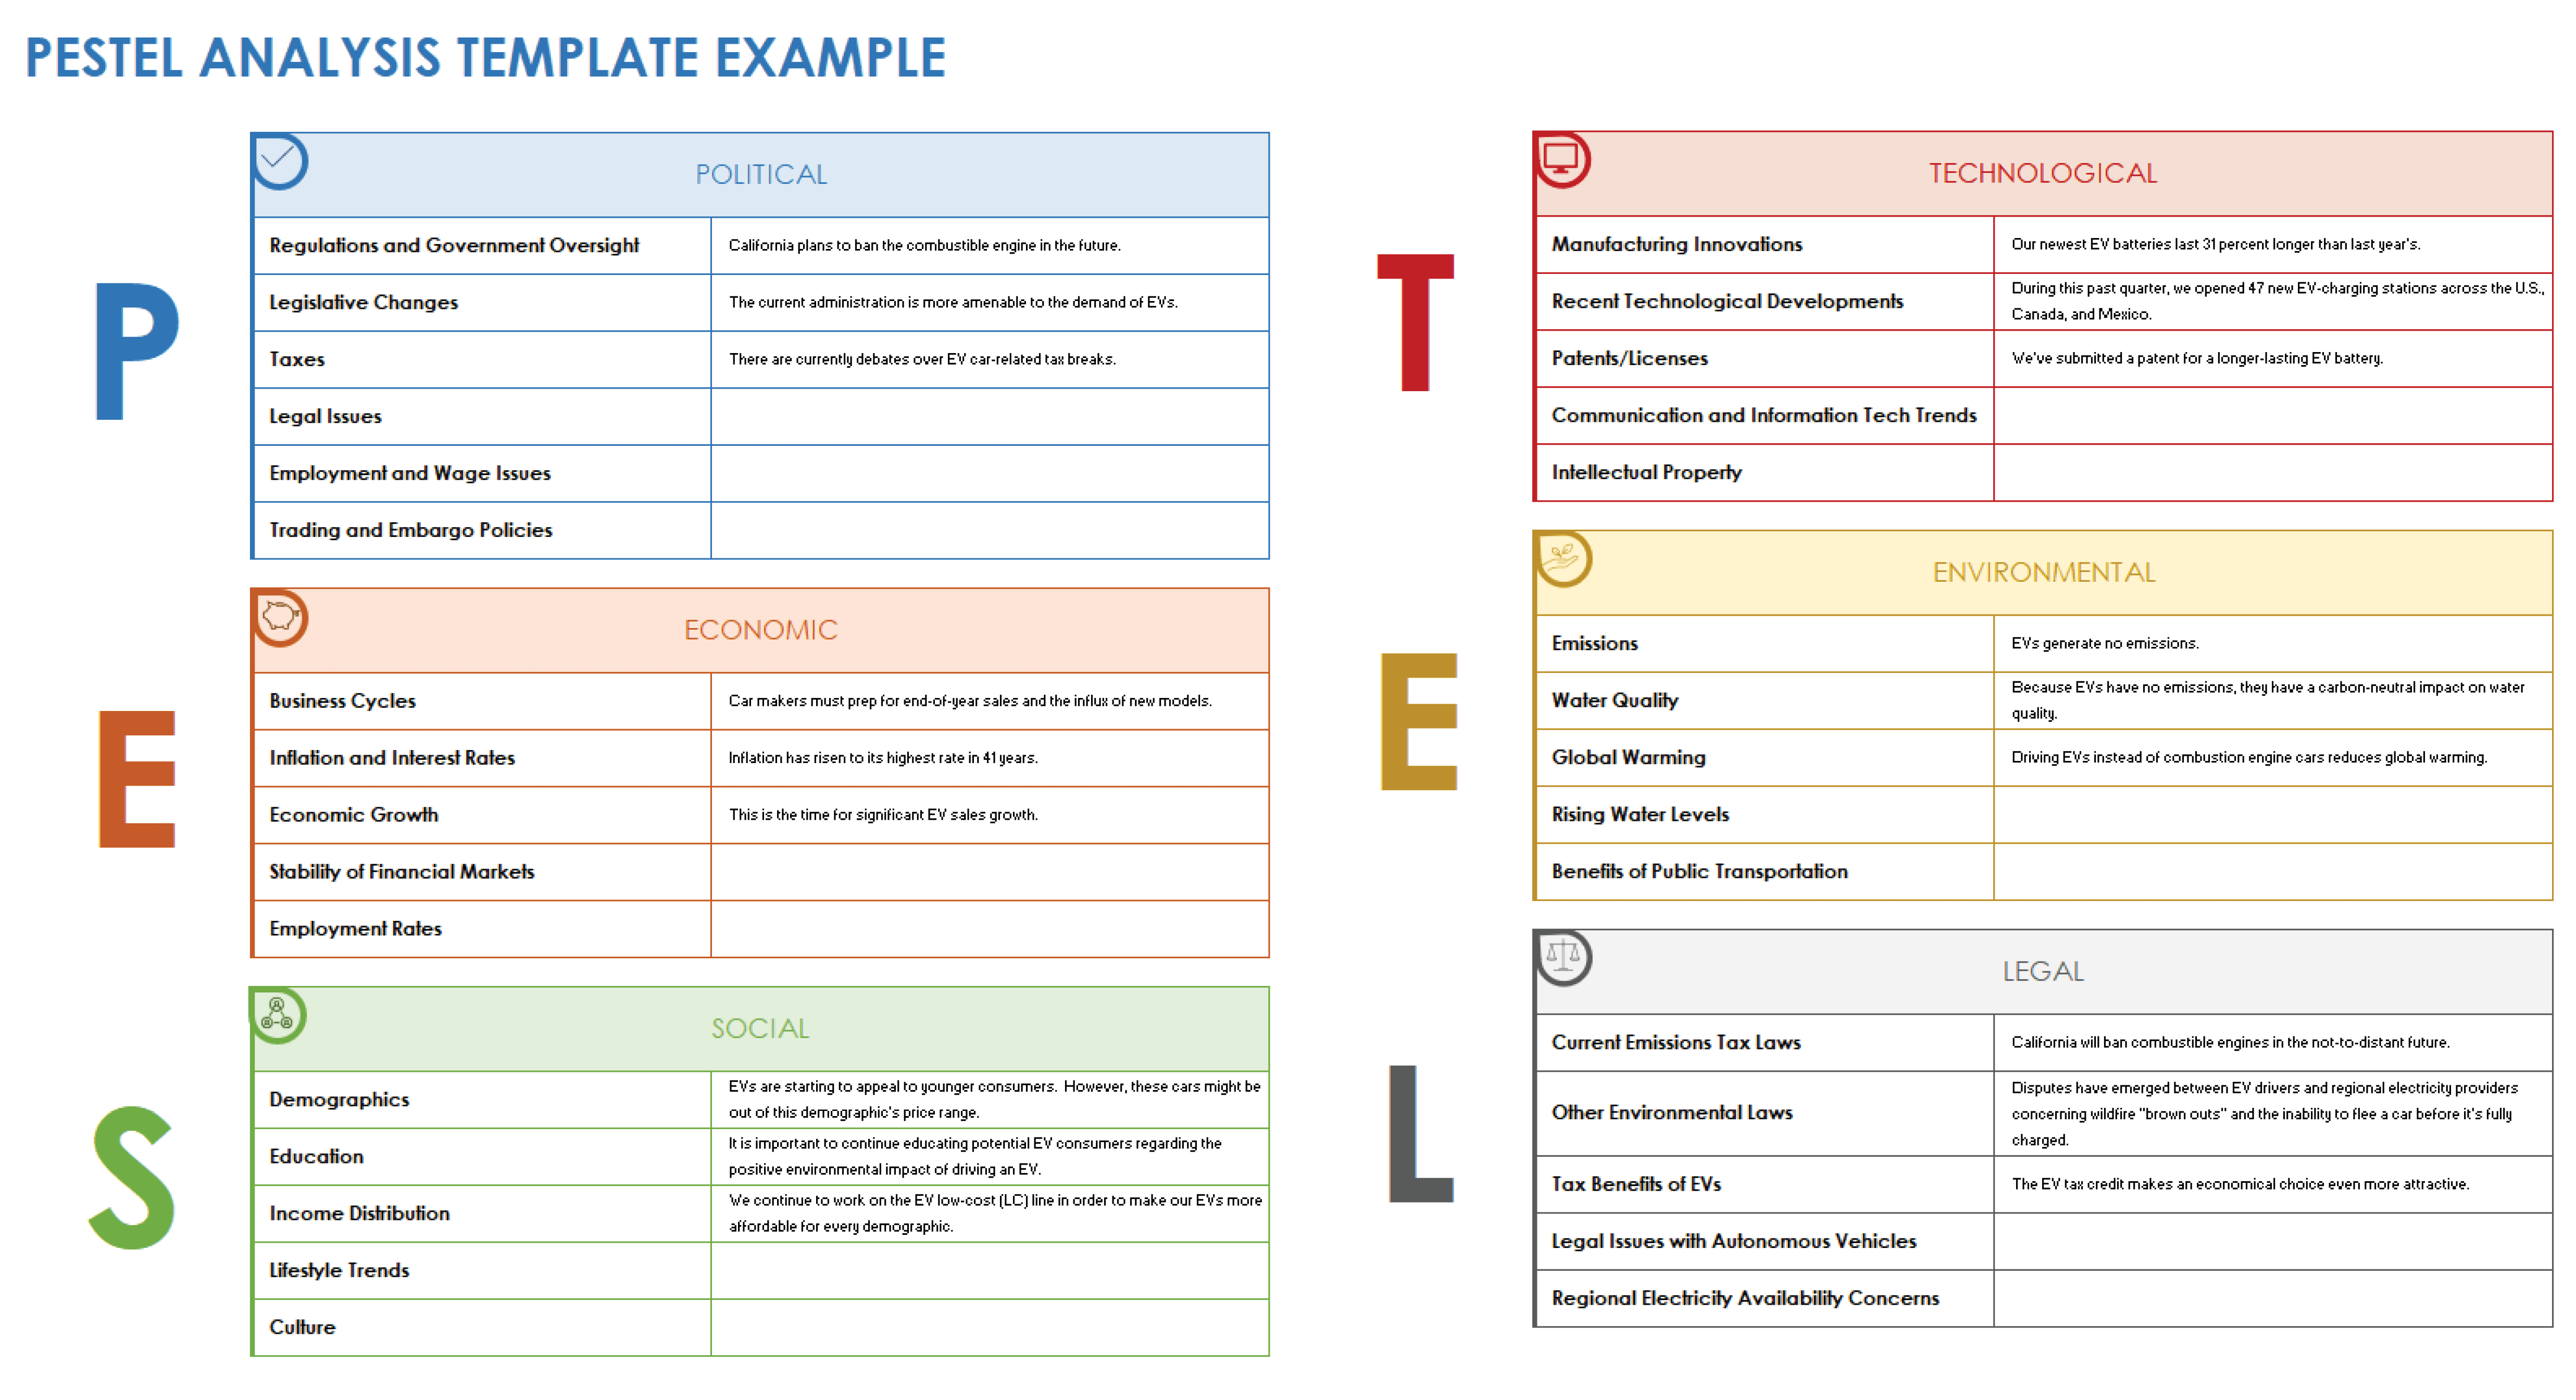 Steeple Analysis Template, Steeple Analysis Example